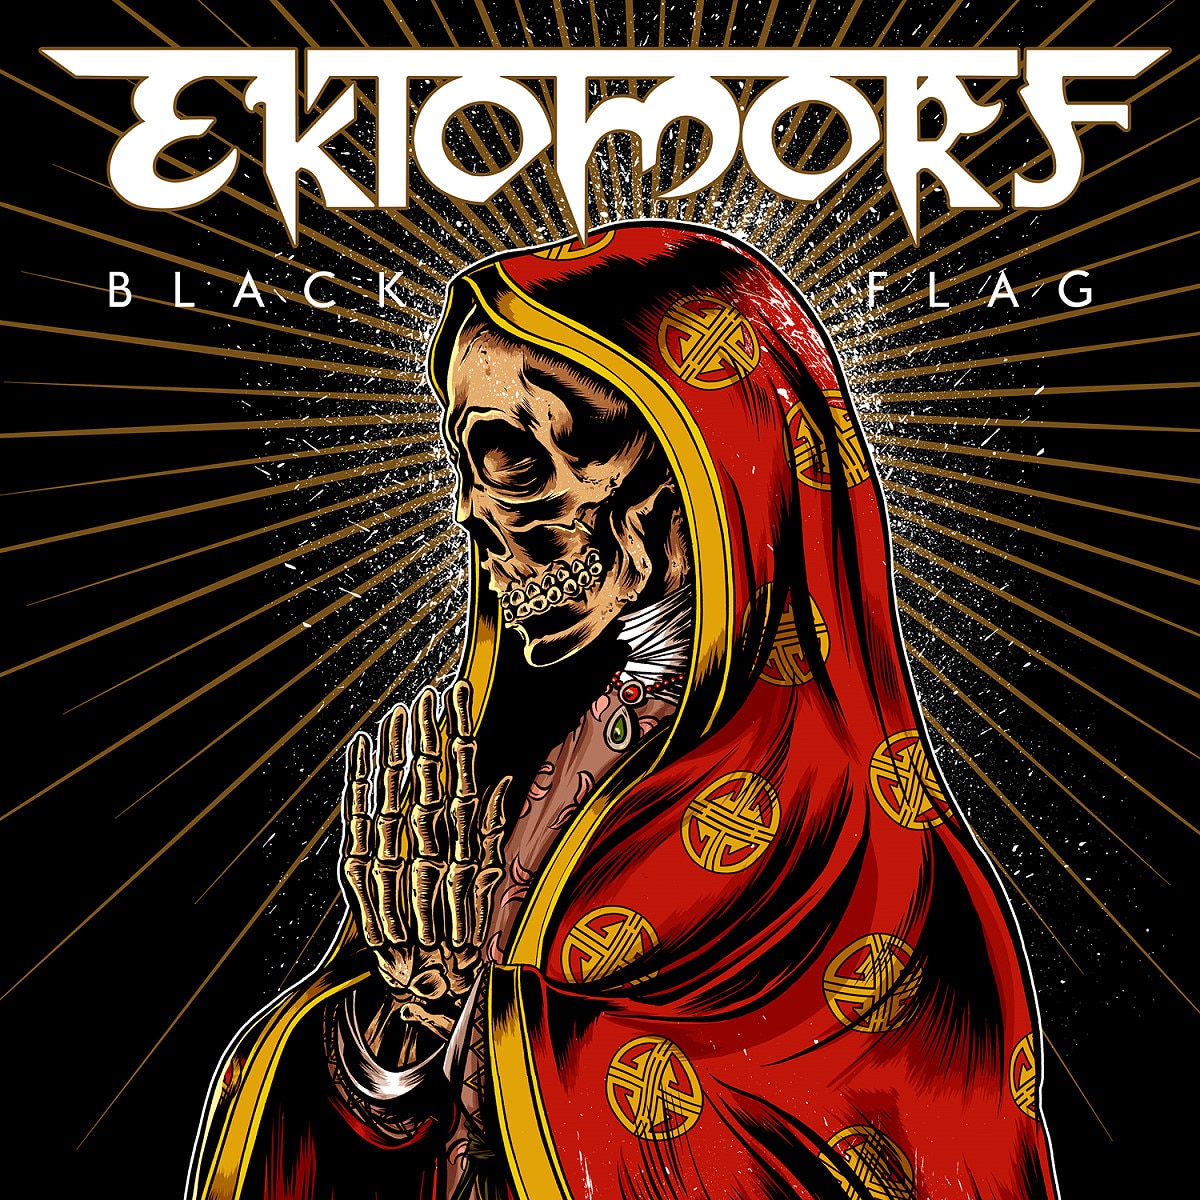 Ektomorf - Black Flag (2012)